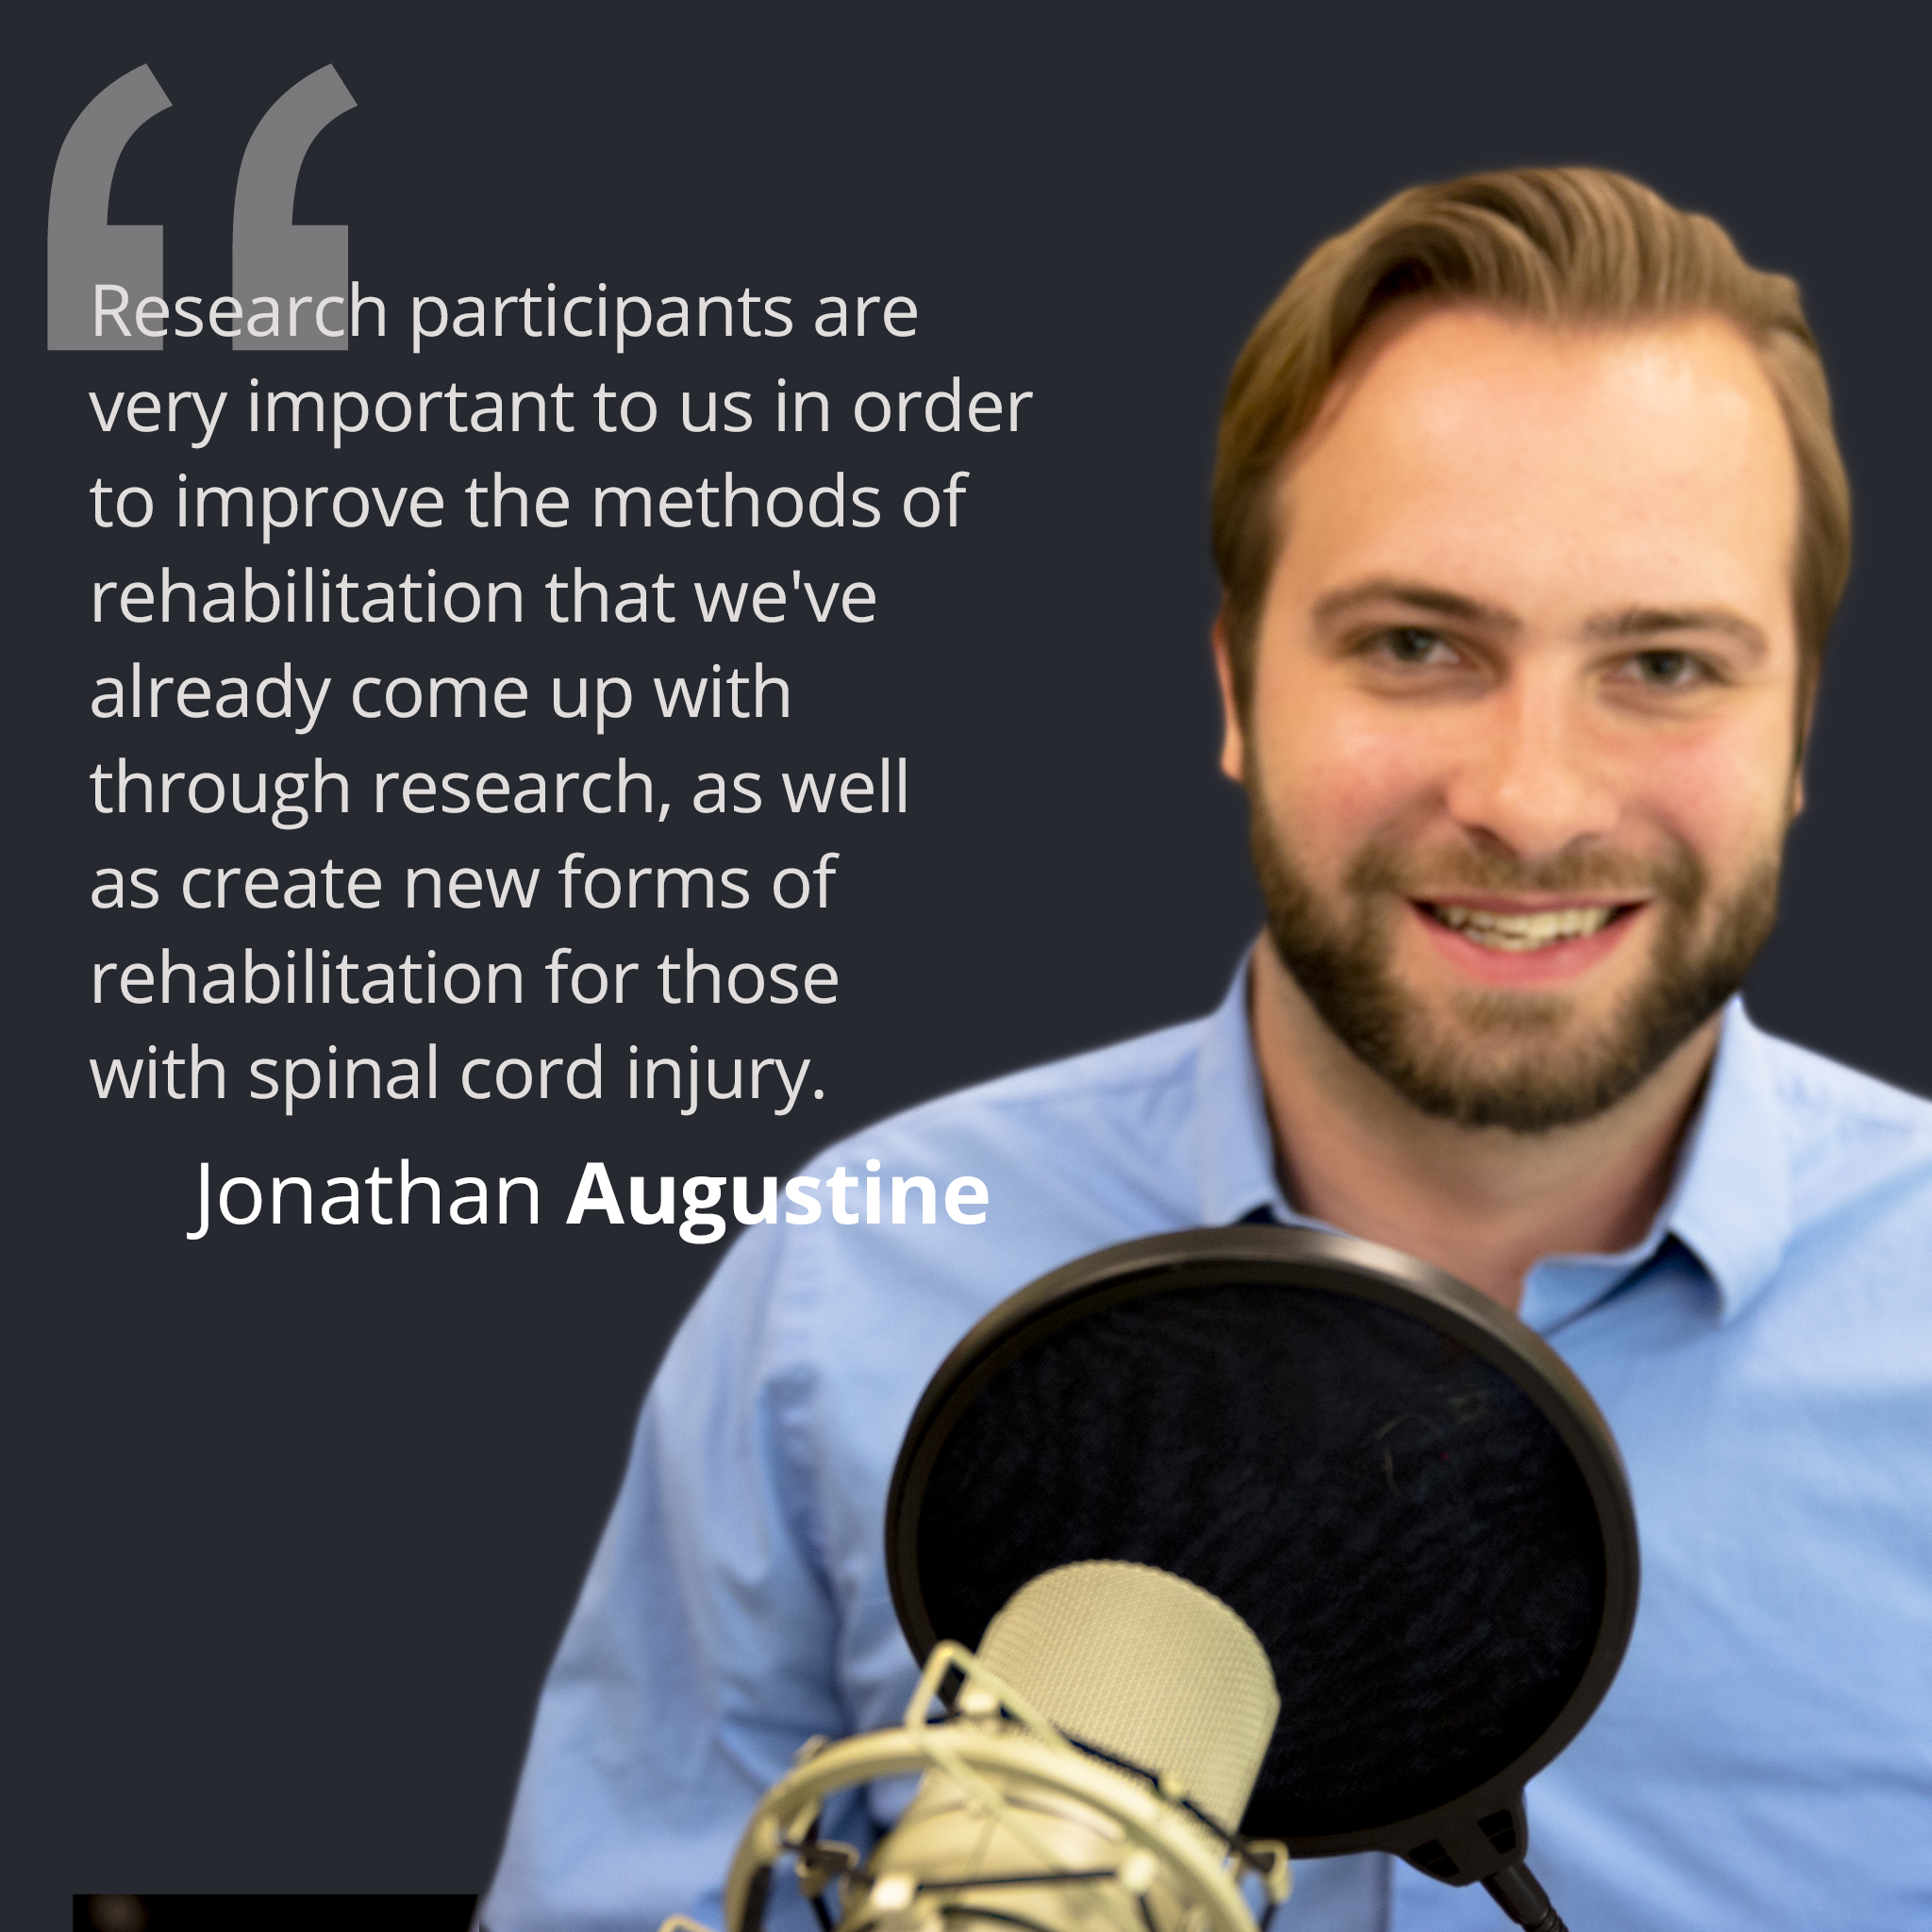 Jonathan Augustine quote and headshot